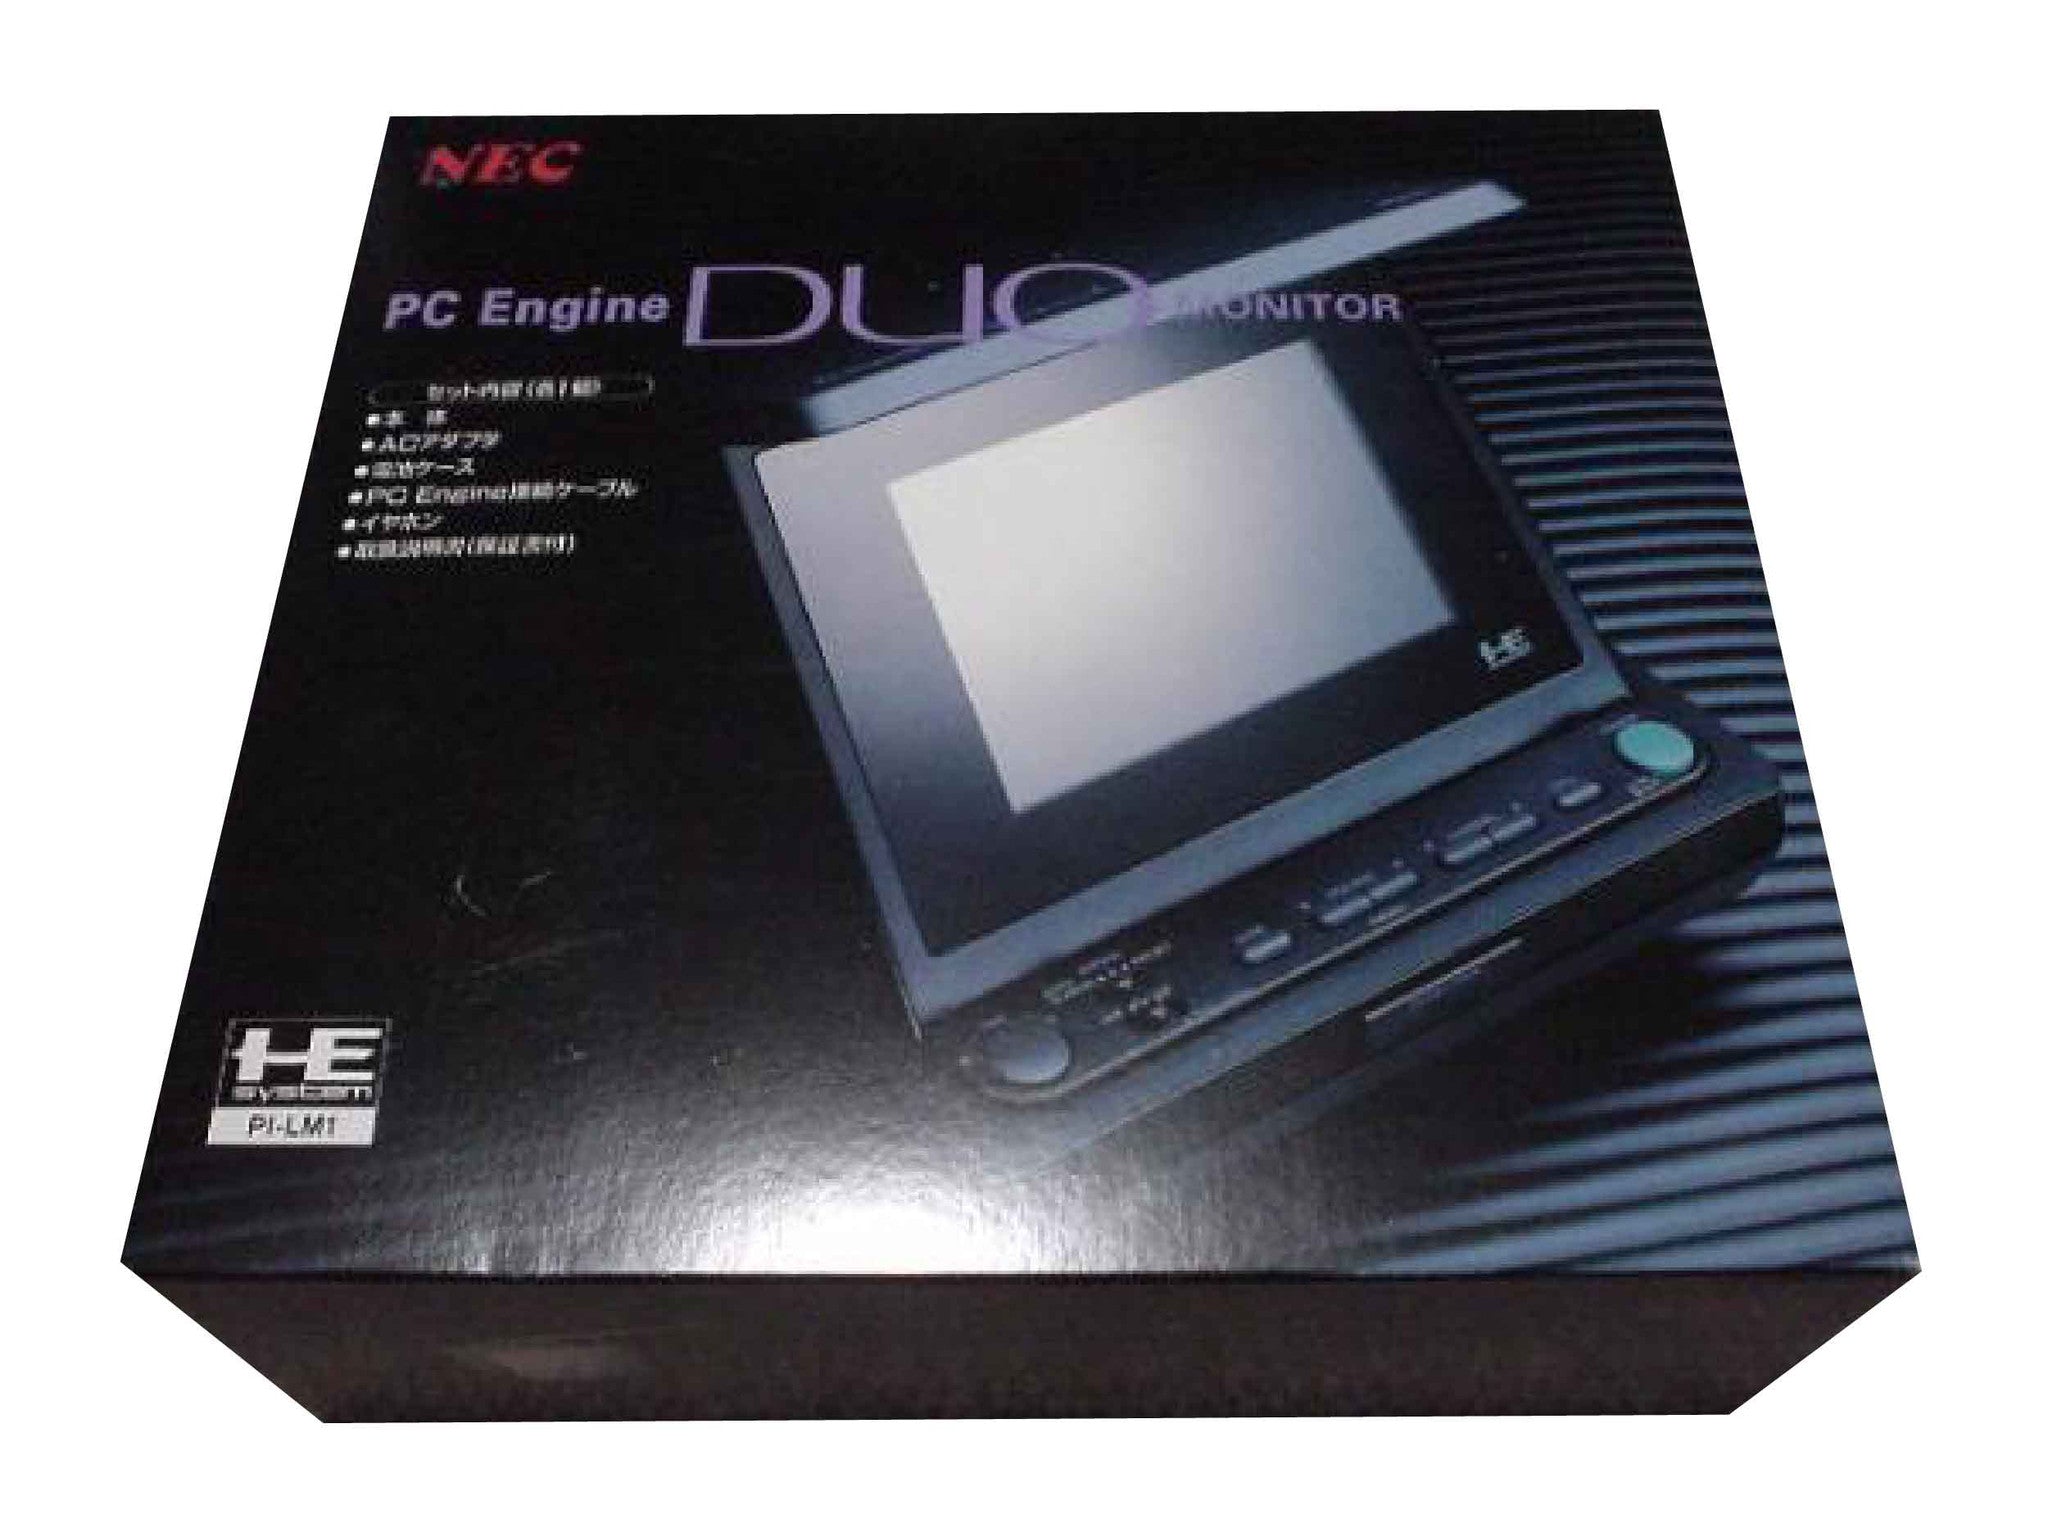 Nec Pc Engine DUO Monitor – RetroPixl